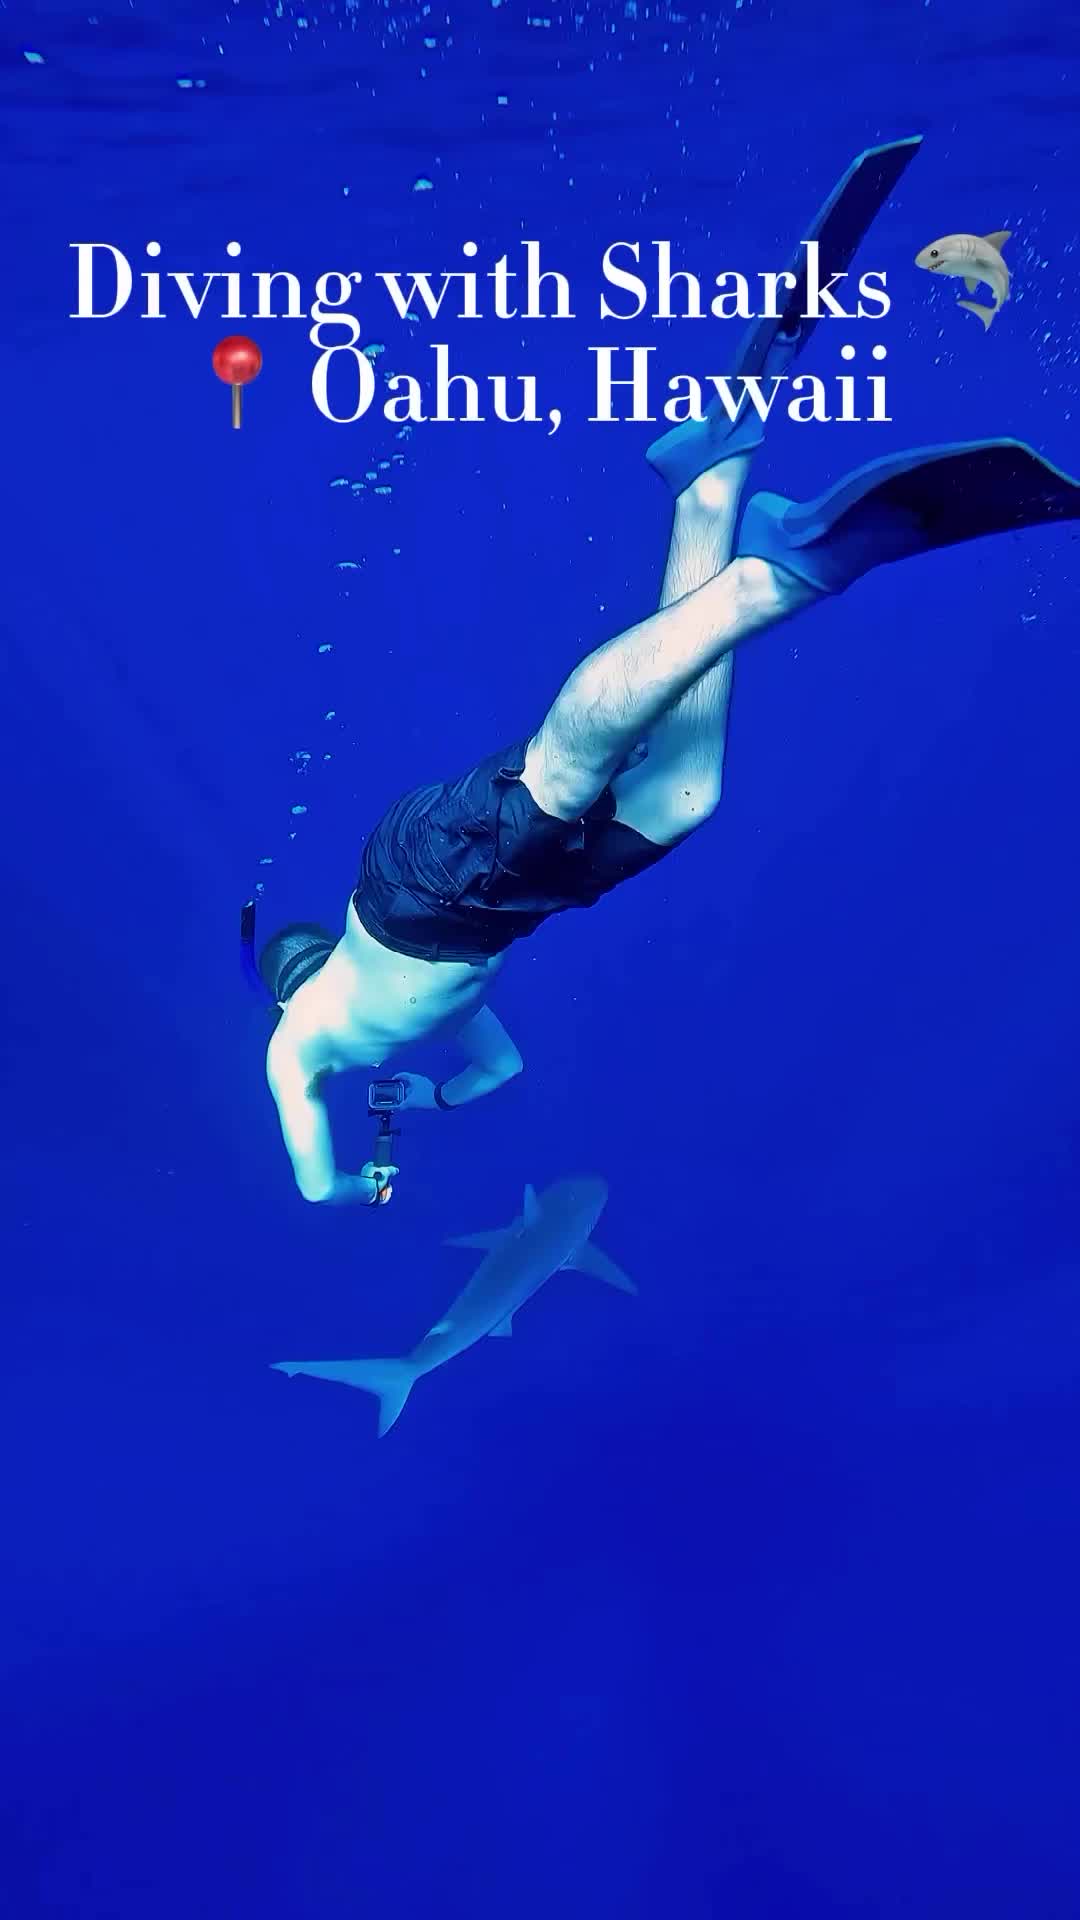 Cage-Free Shark Dive Adventure in Oahu, Hawaii